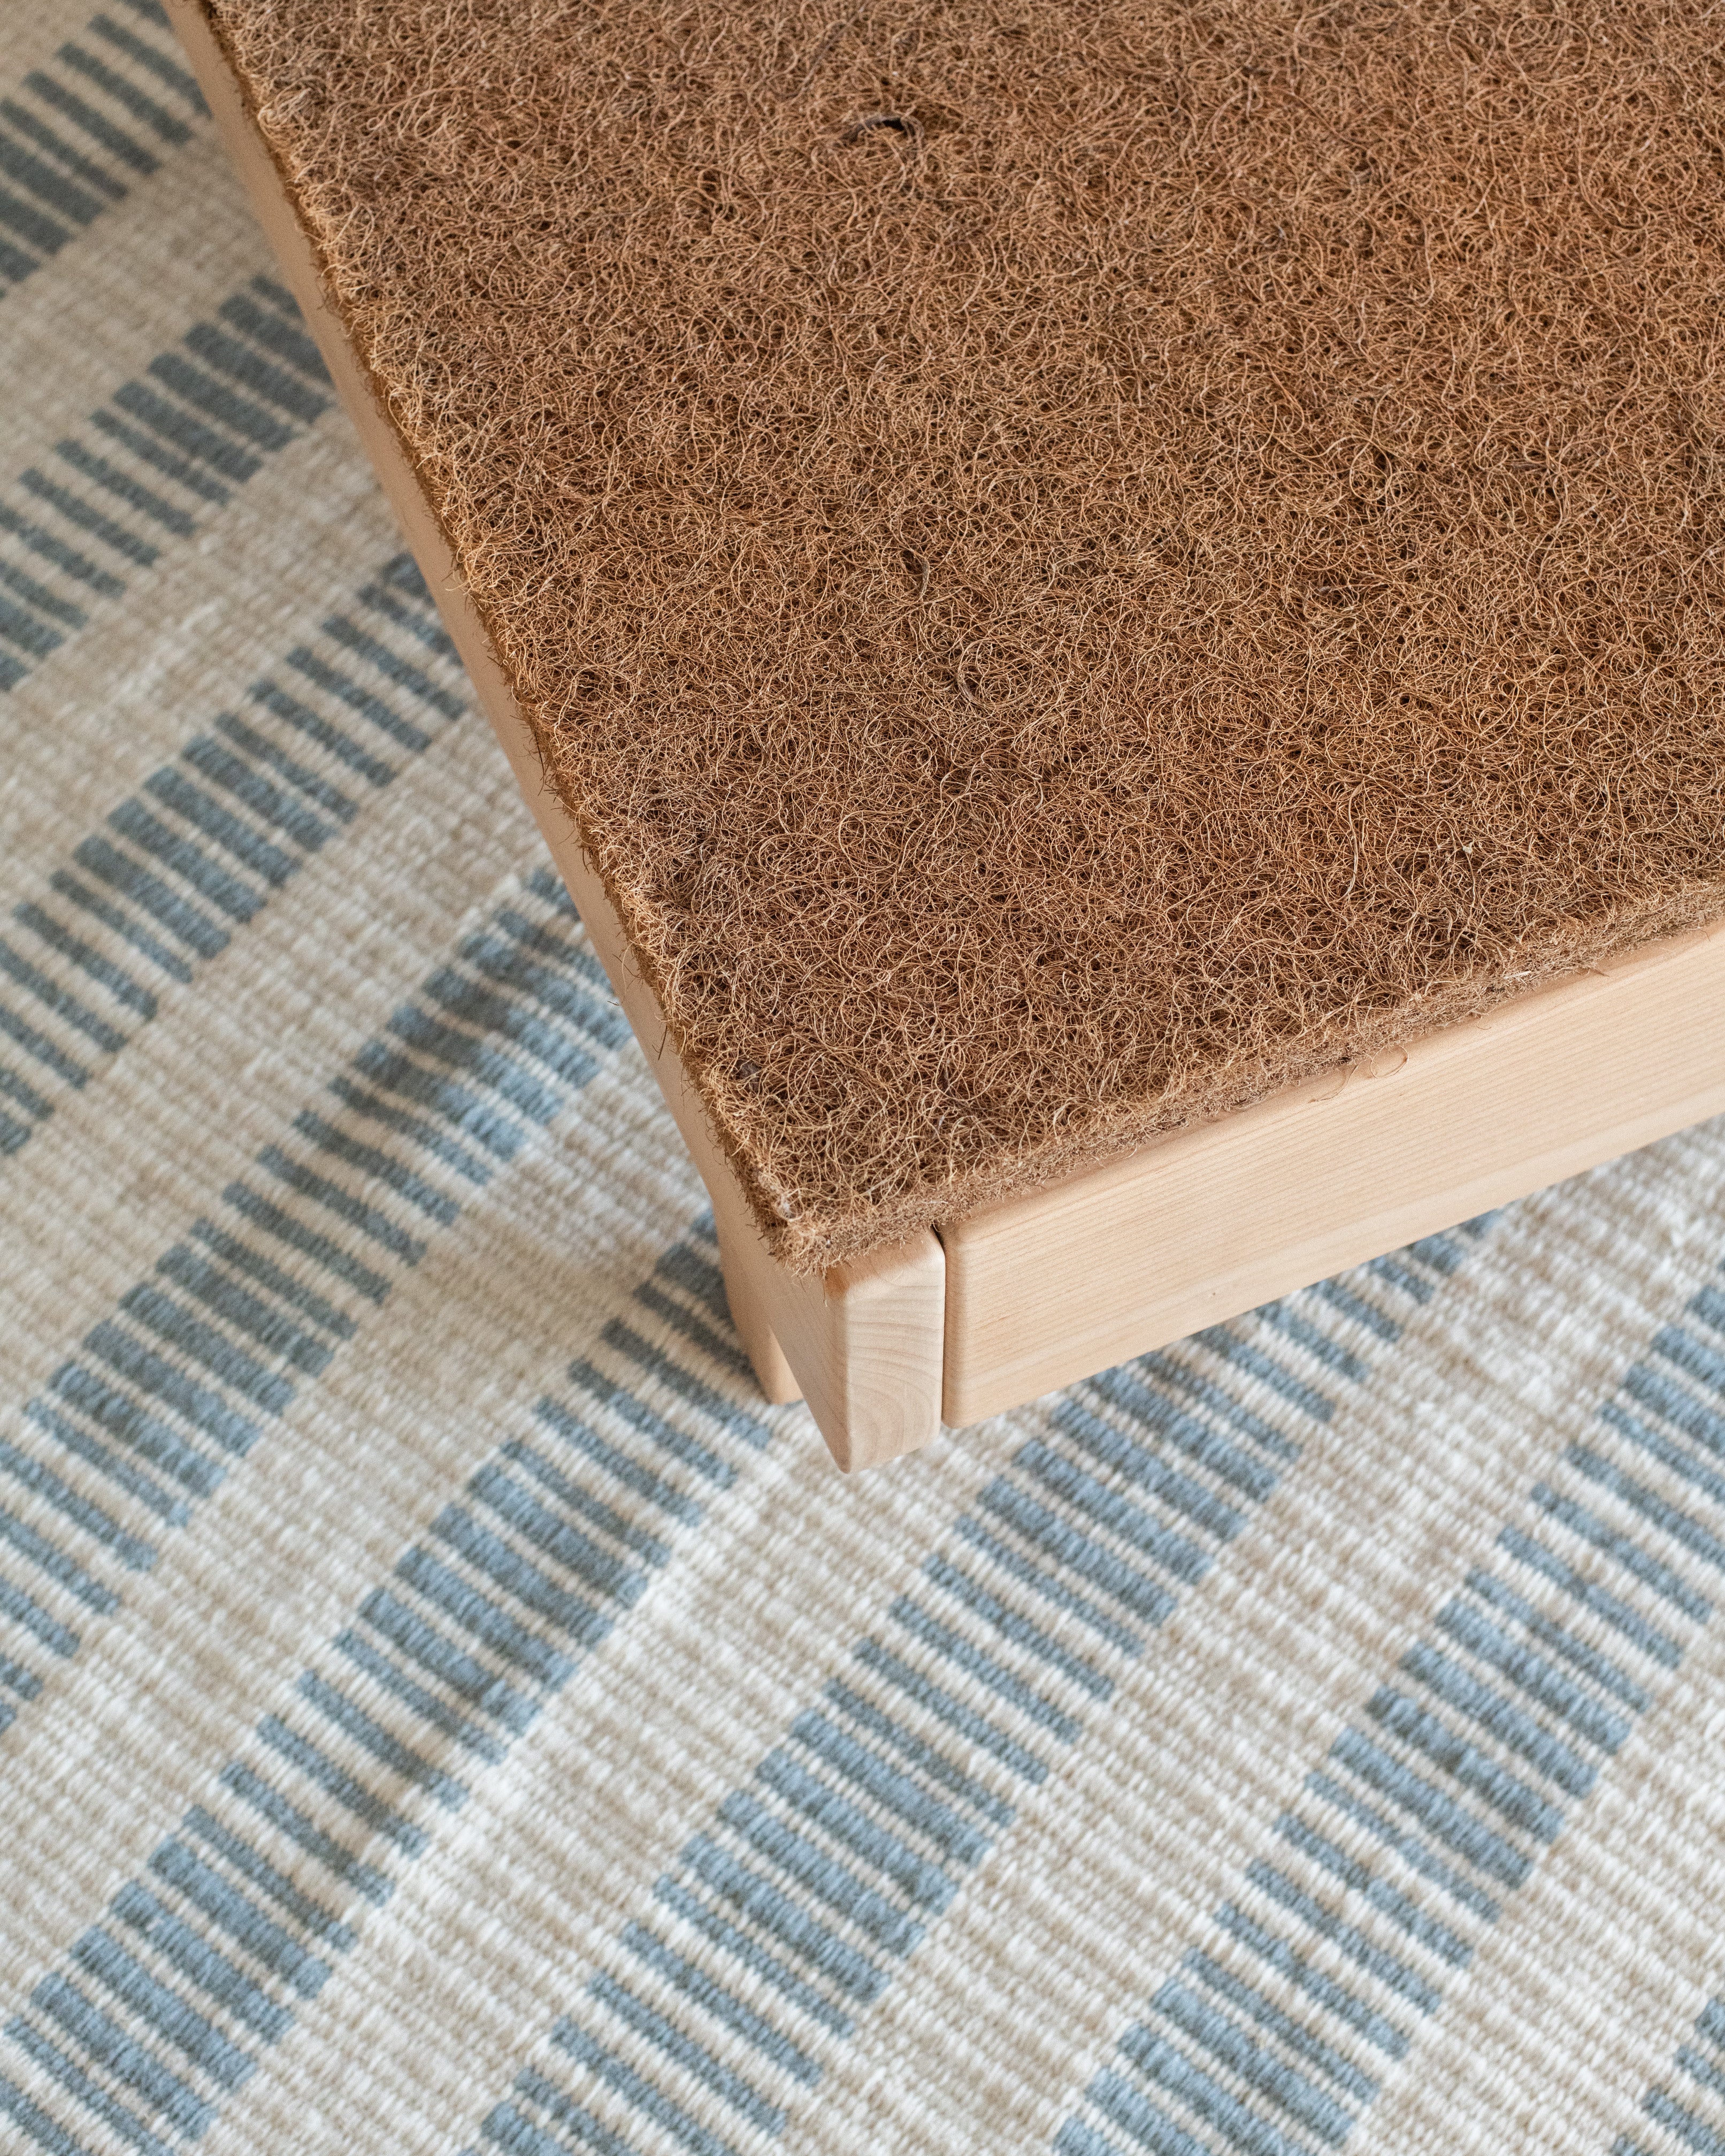 Kakun Organic Coconut Coir Bed Rug for mold prevention